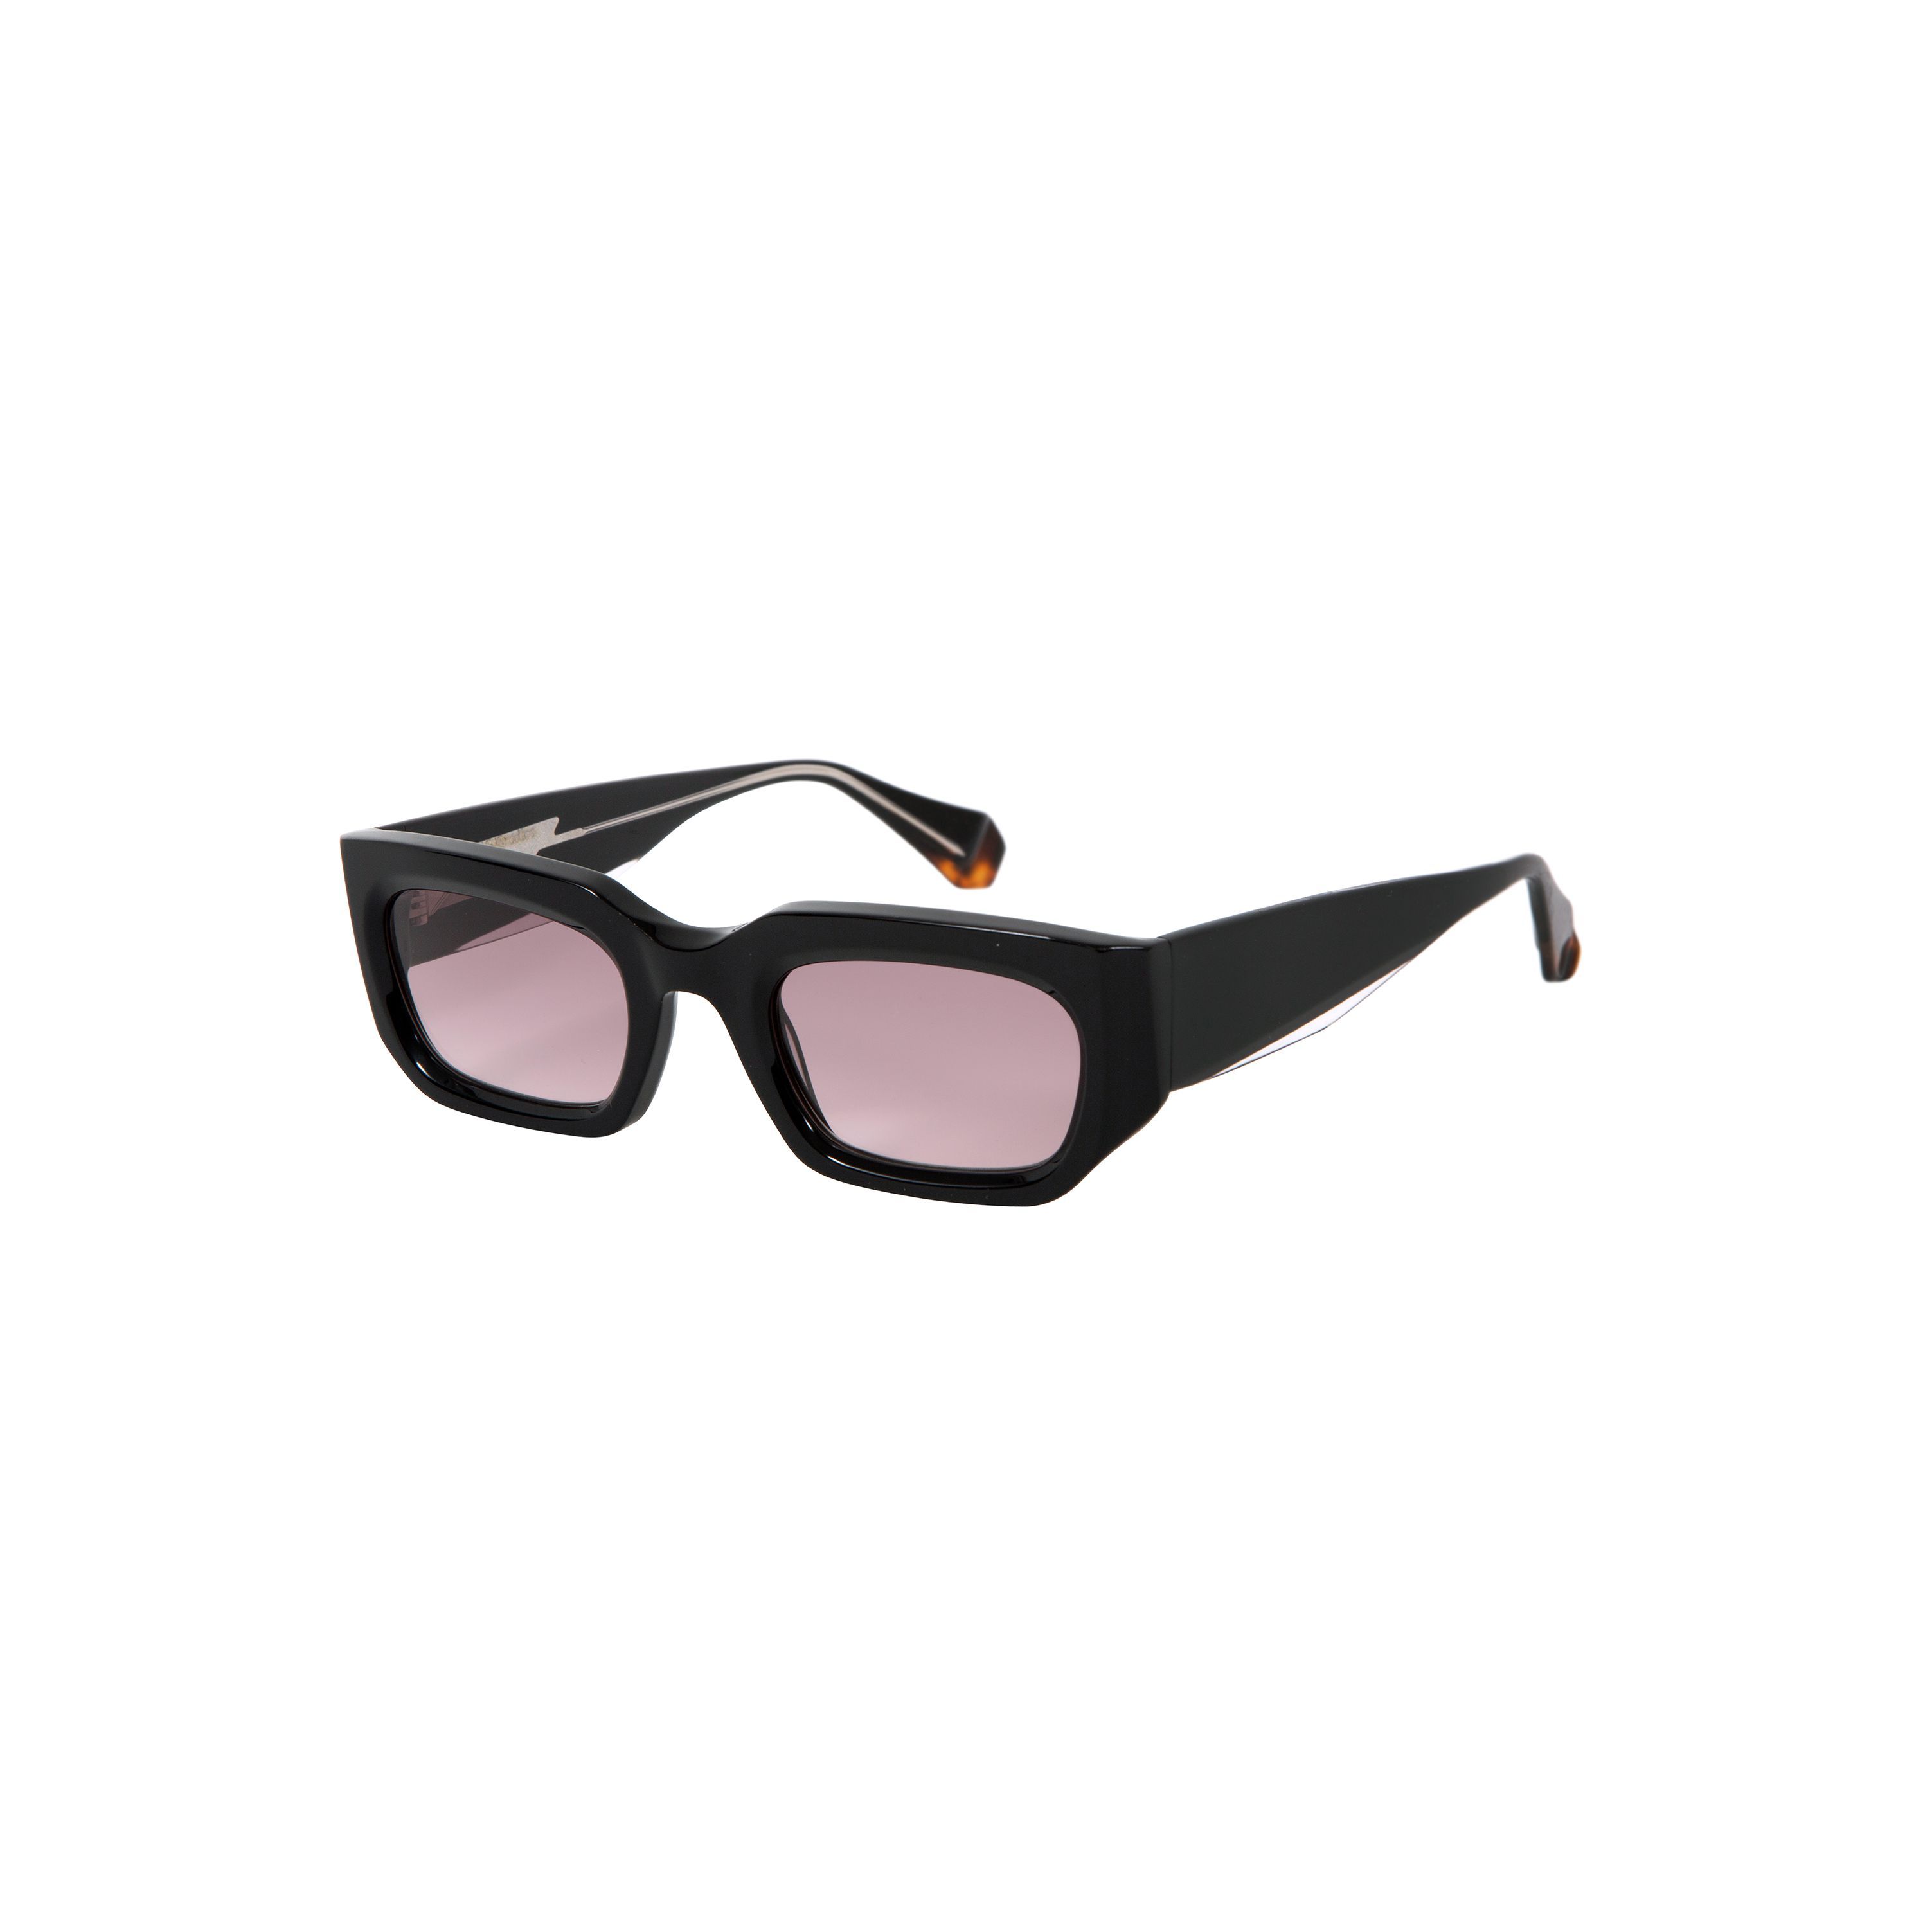 6735 Rectangle Sunglasses 1 - size 50